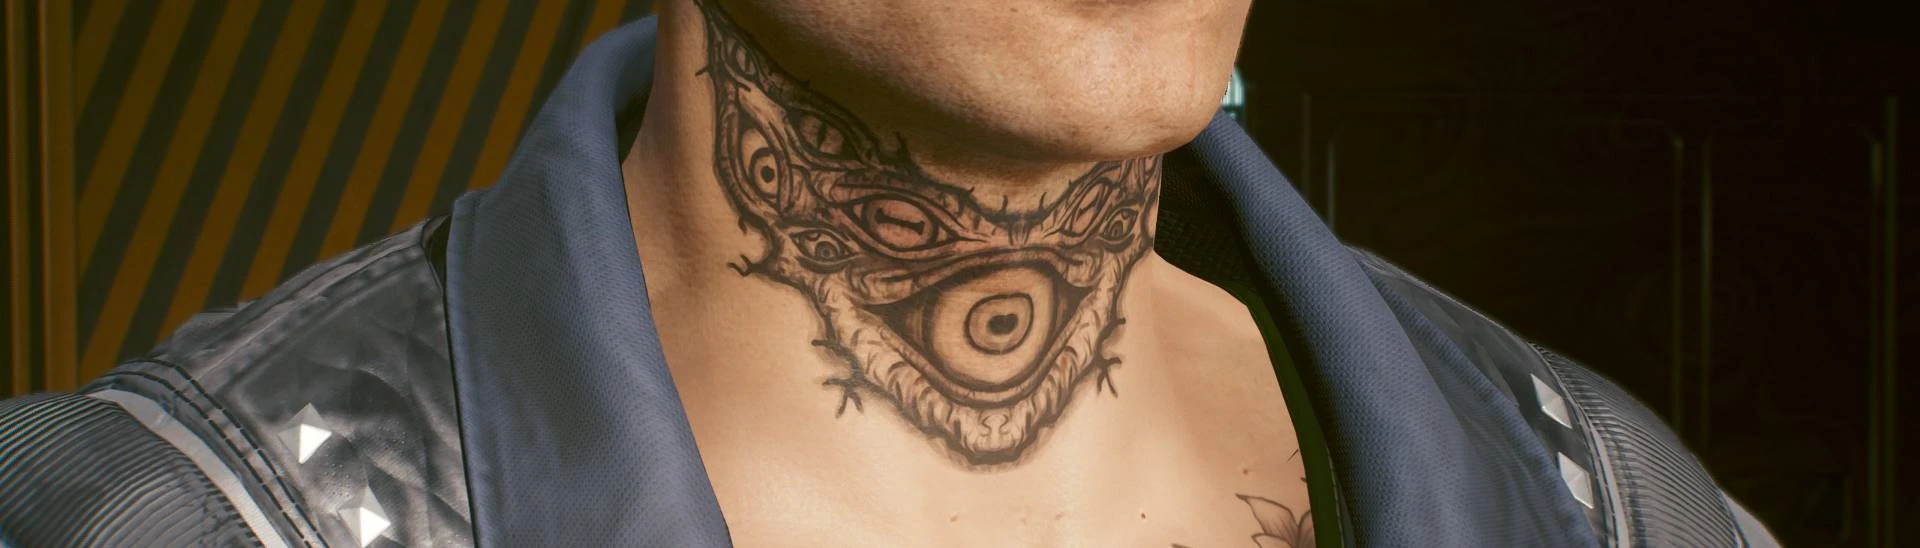 Tattoos and Neck Tattoos image inspiration on Designspiration